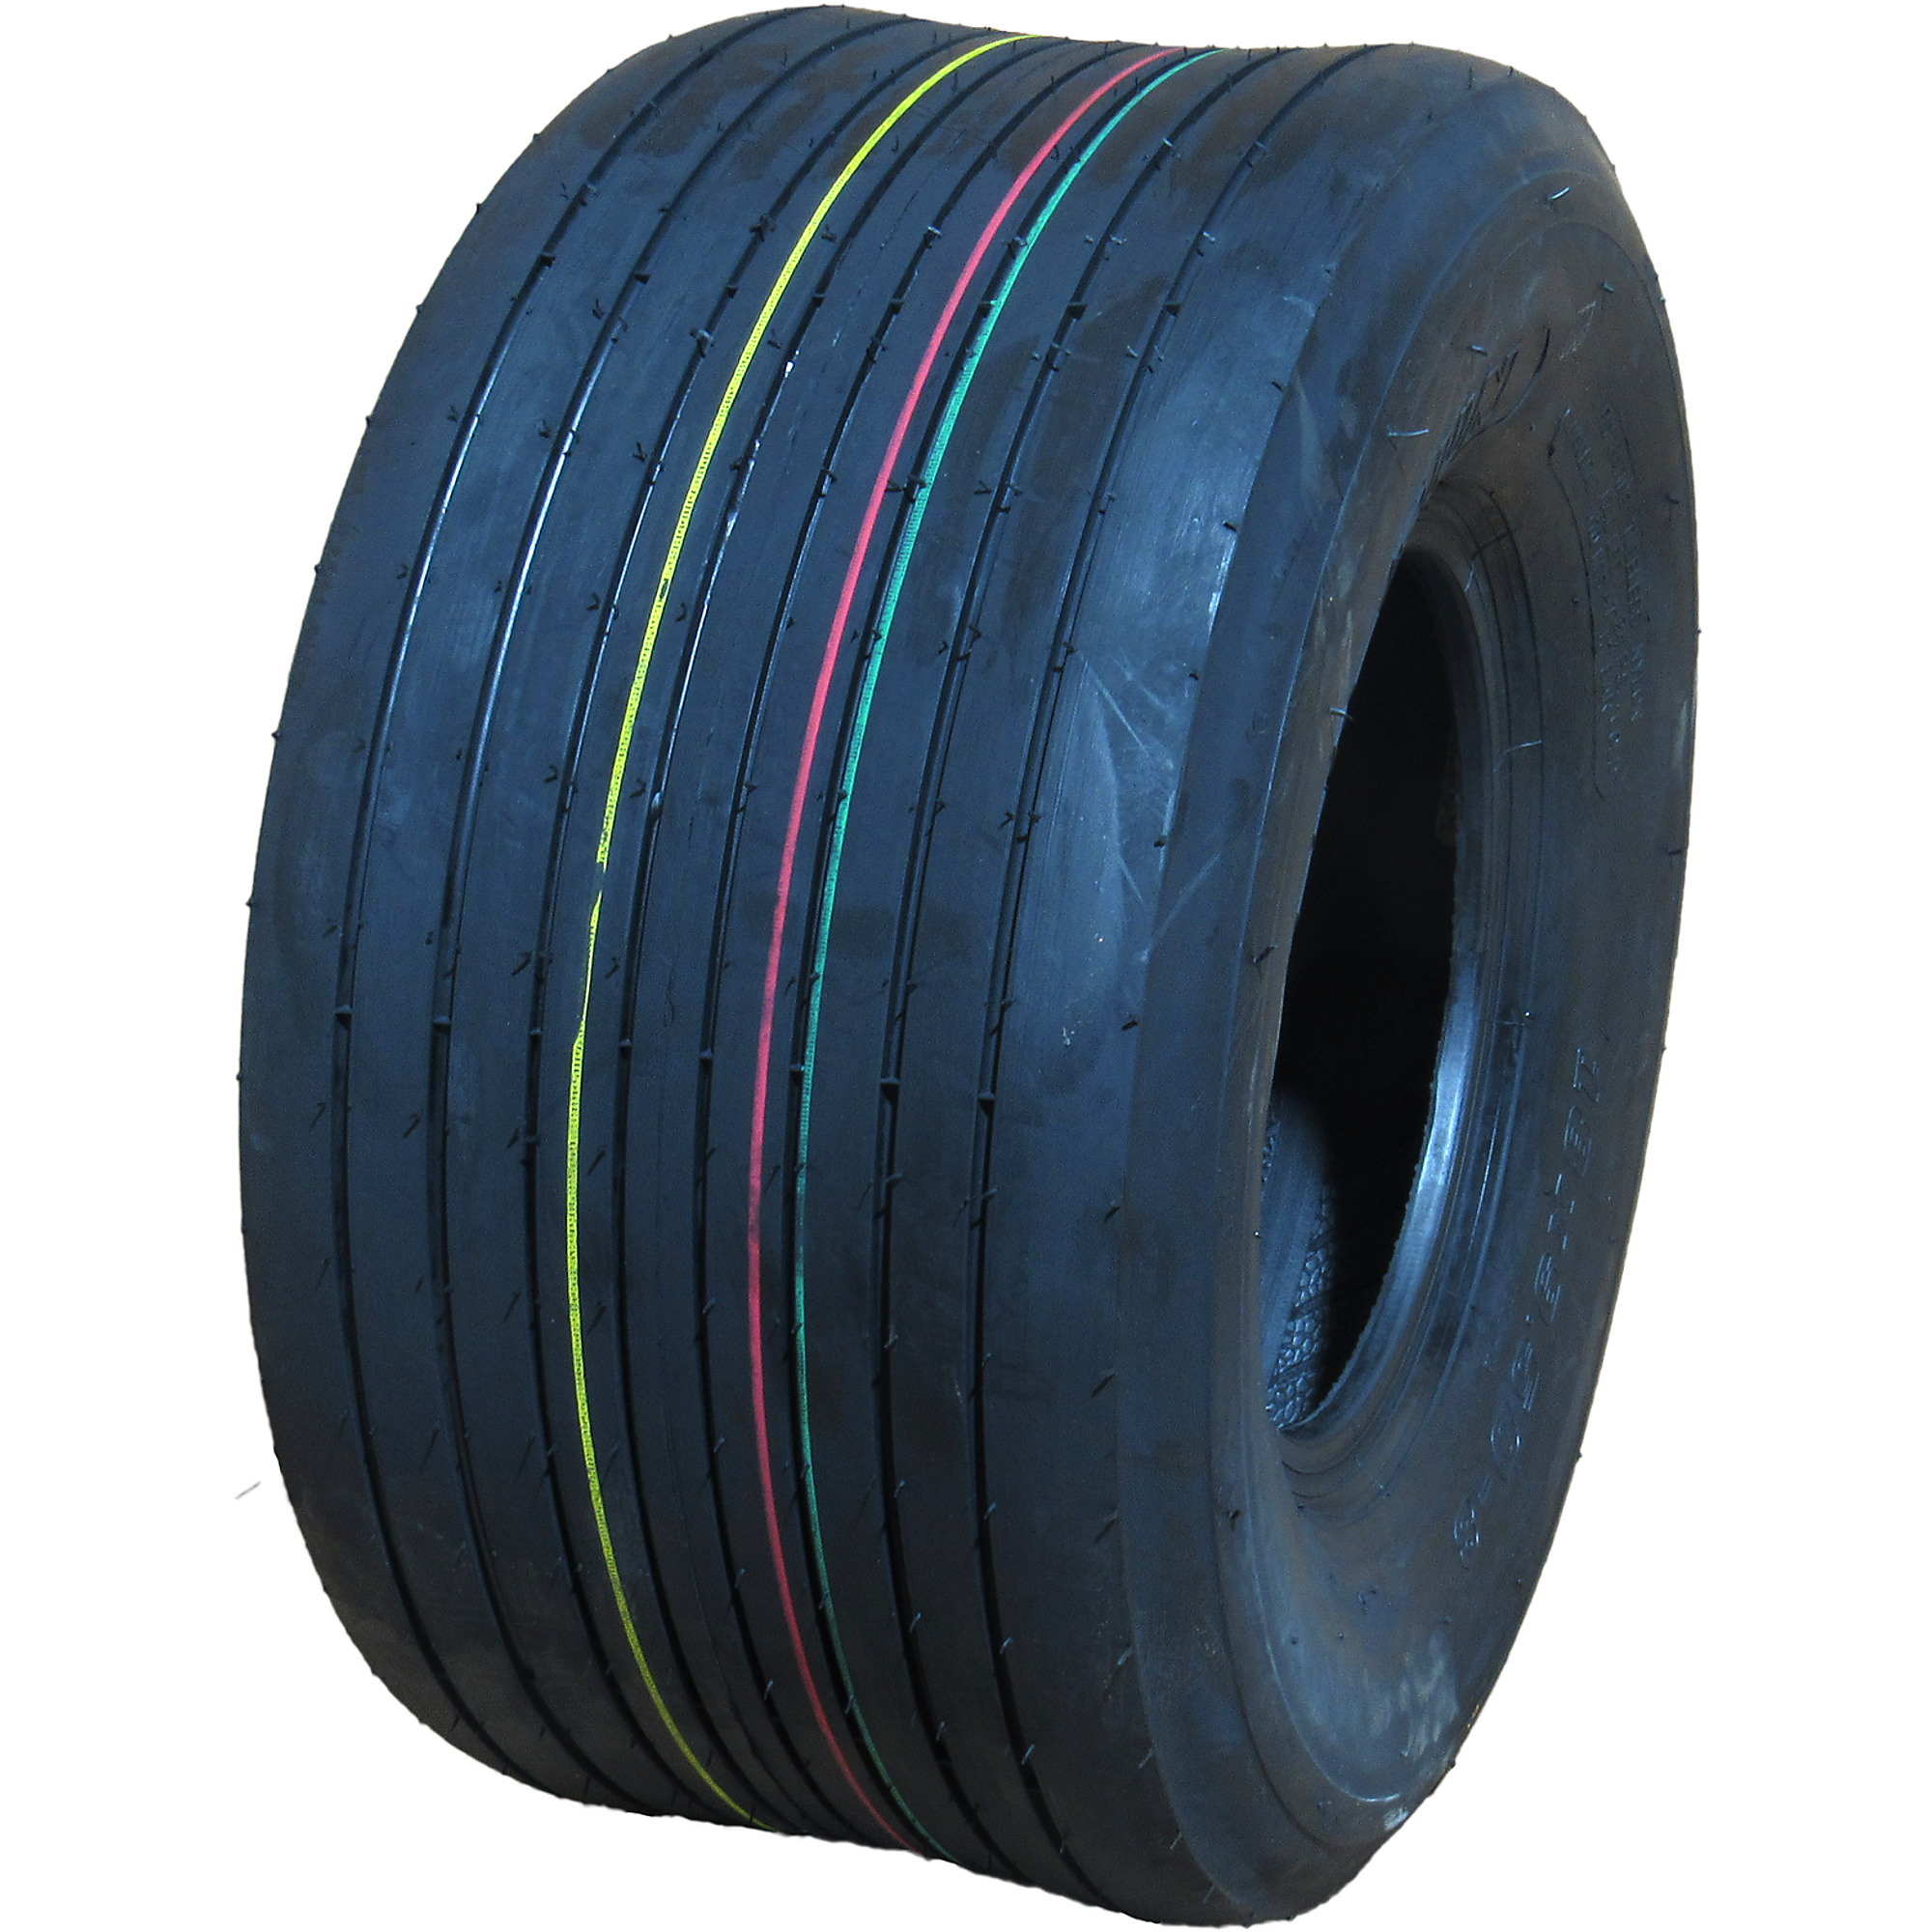 HI-RUN, Lawn Garden Tire, SU08 Rib, Tire Size 18X9.50-8 Load Range Rating B, Model WD1293